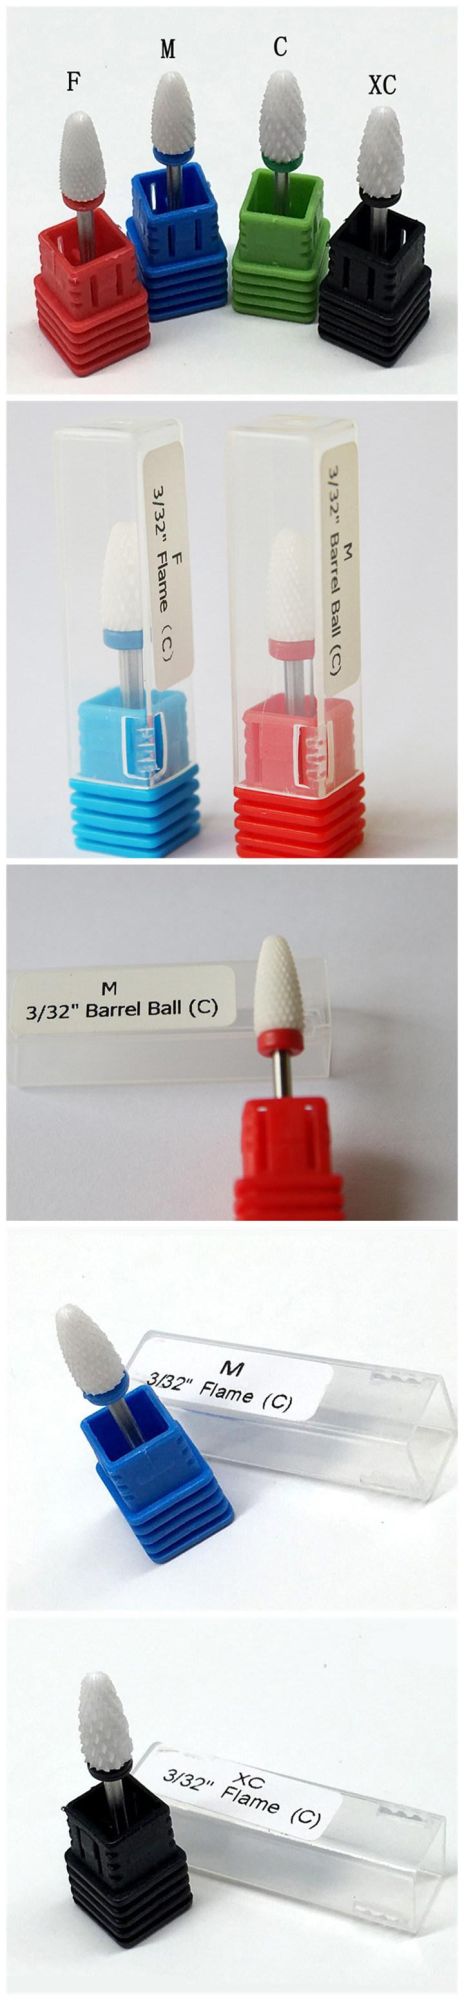 Nail Manicure Tools Nail Drill Ceramic Bits Files